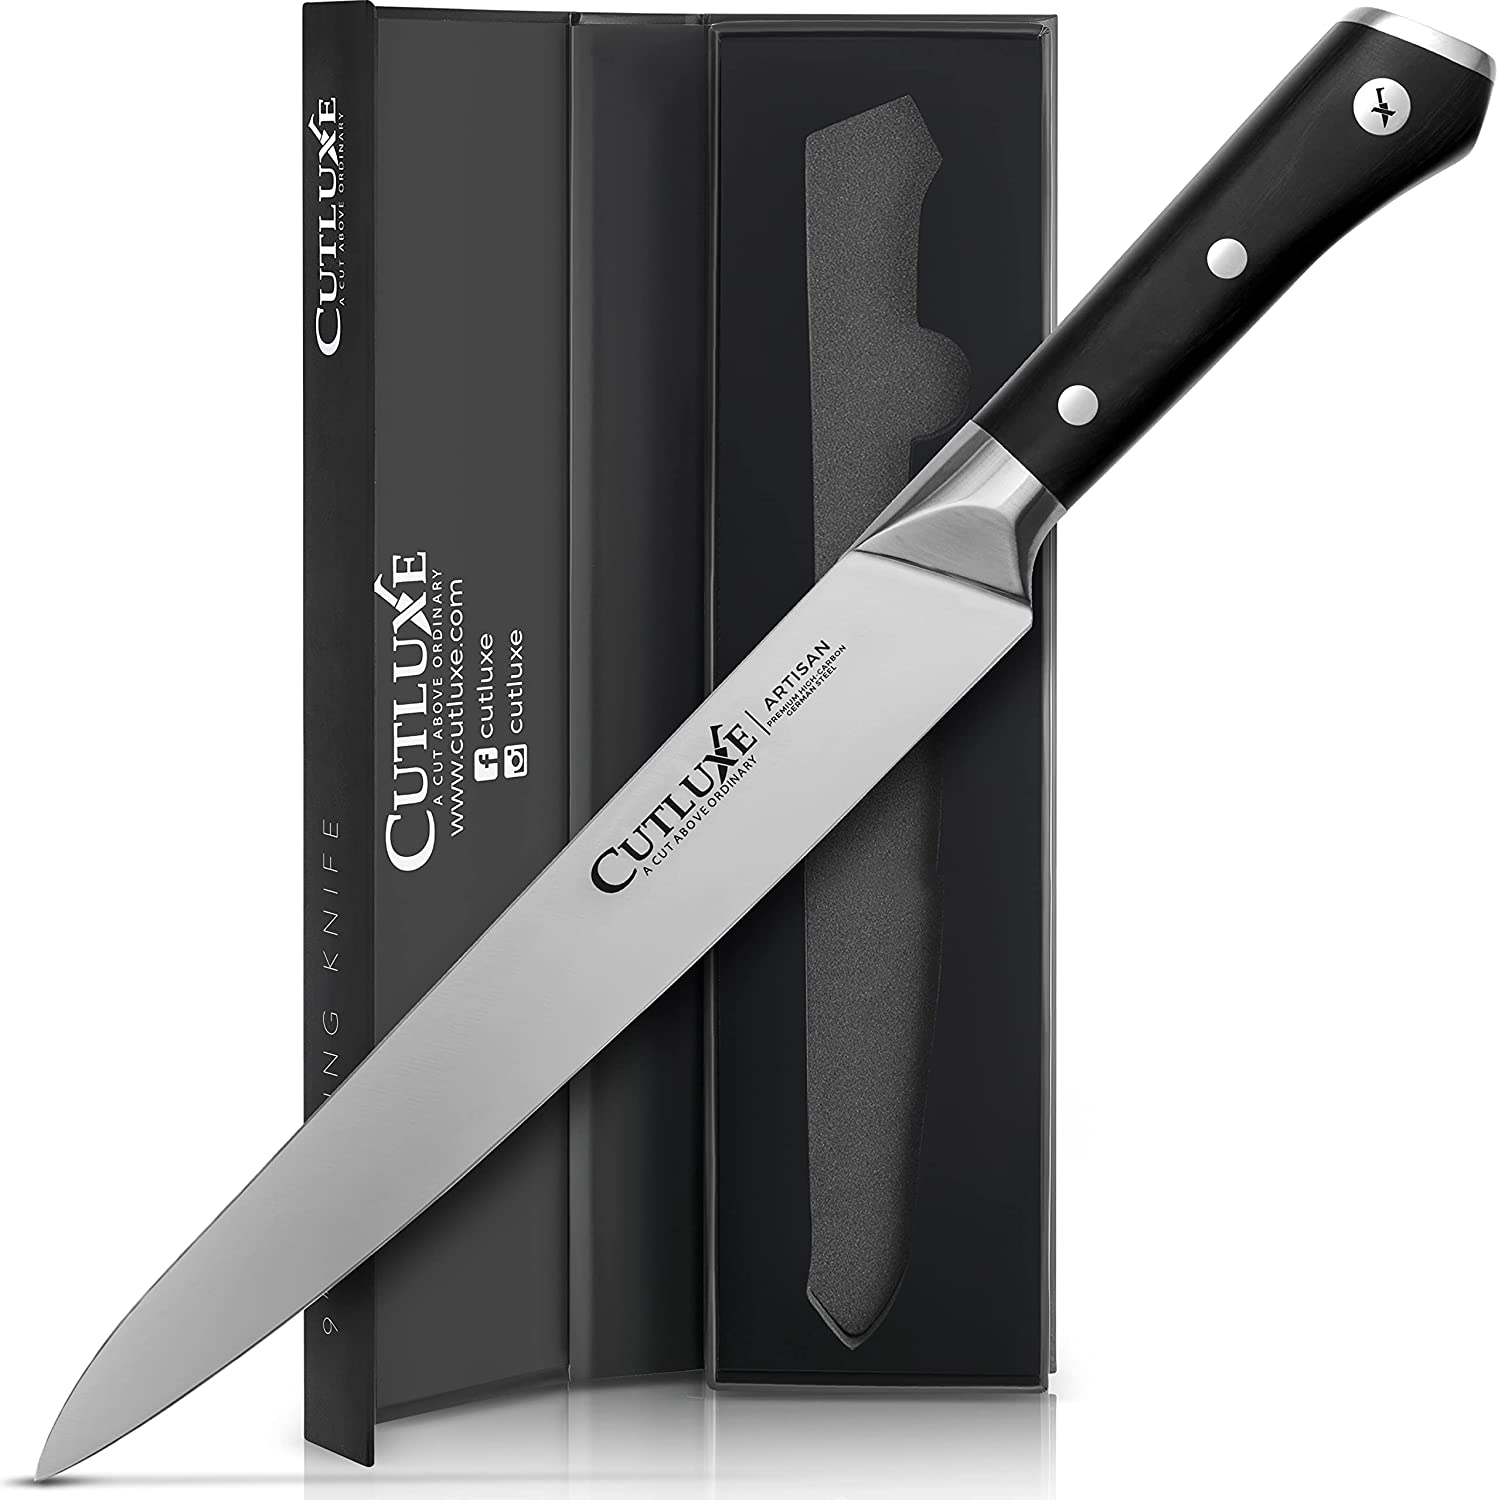 Cutluxe Meat Carving Knife – 9 Turkey Carving Knife – Razor Sharp & Full Tang – High Carbon German Steel – Ergonomic Handle Design – Artisan Series